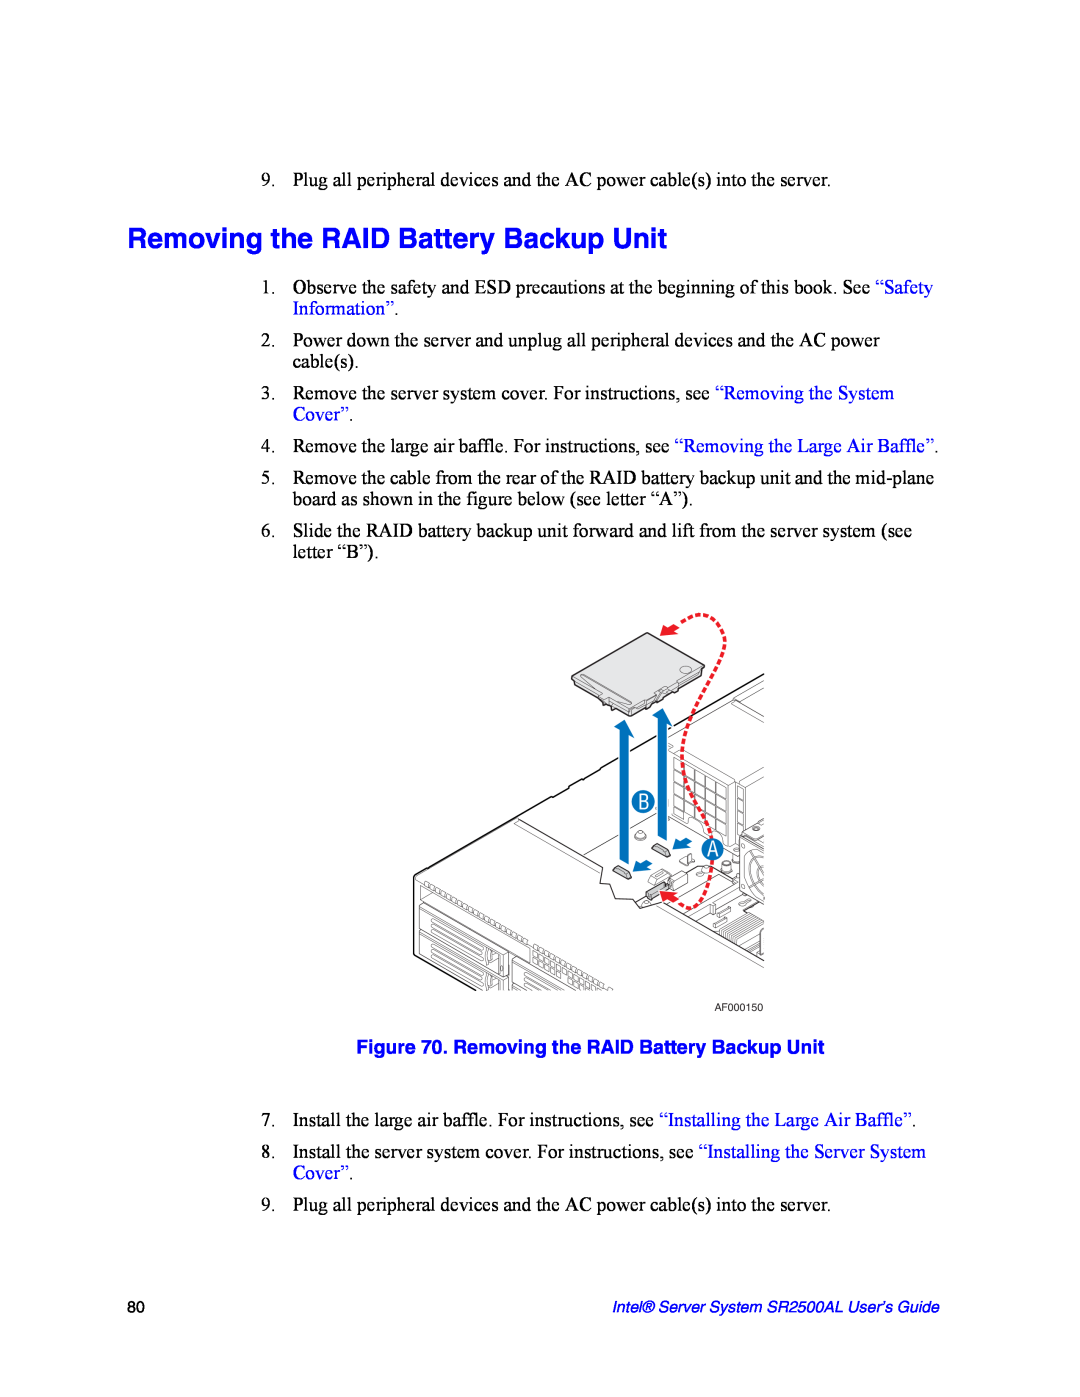 Intel SR2500AL manual Removing the RAID Battery Backup Unit 